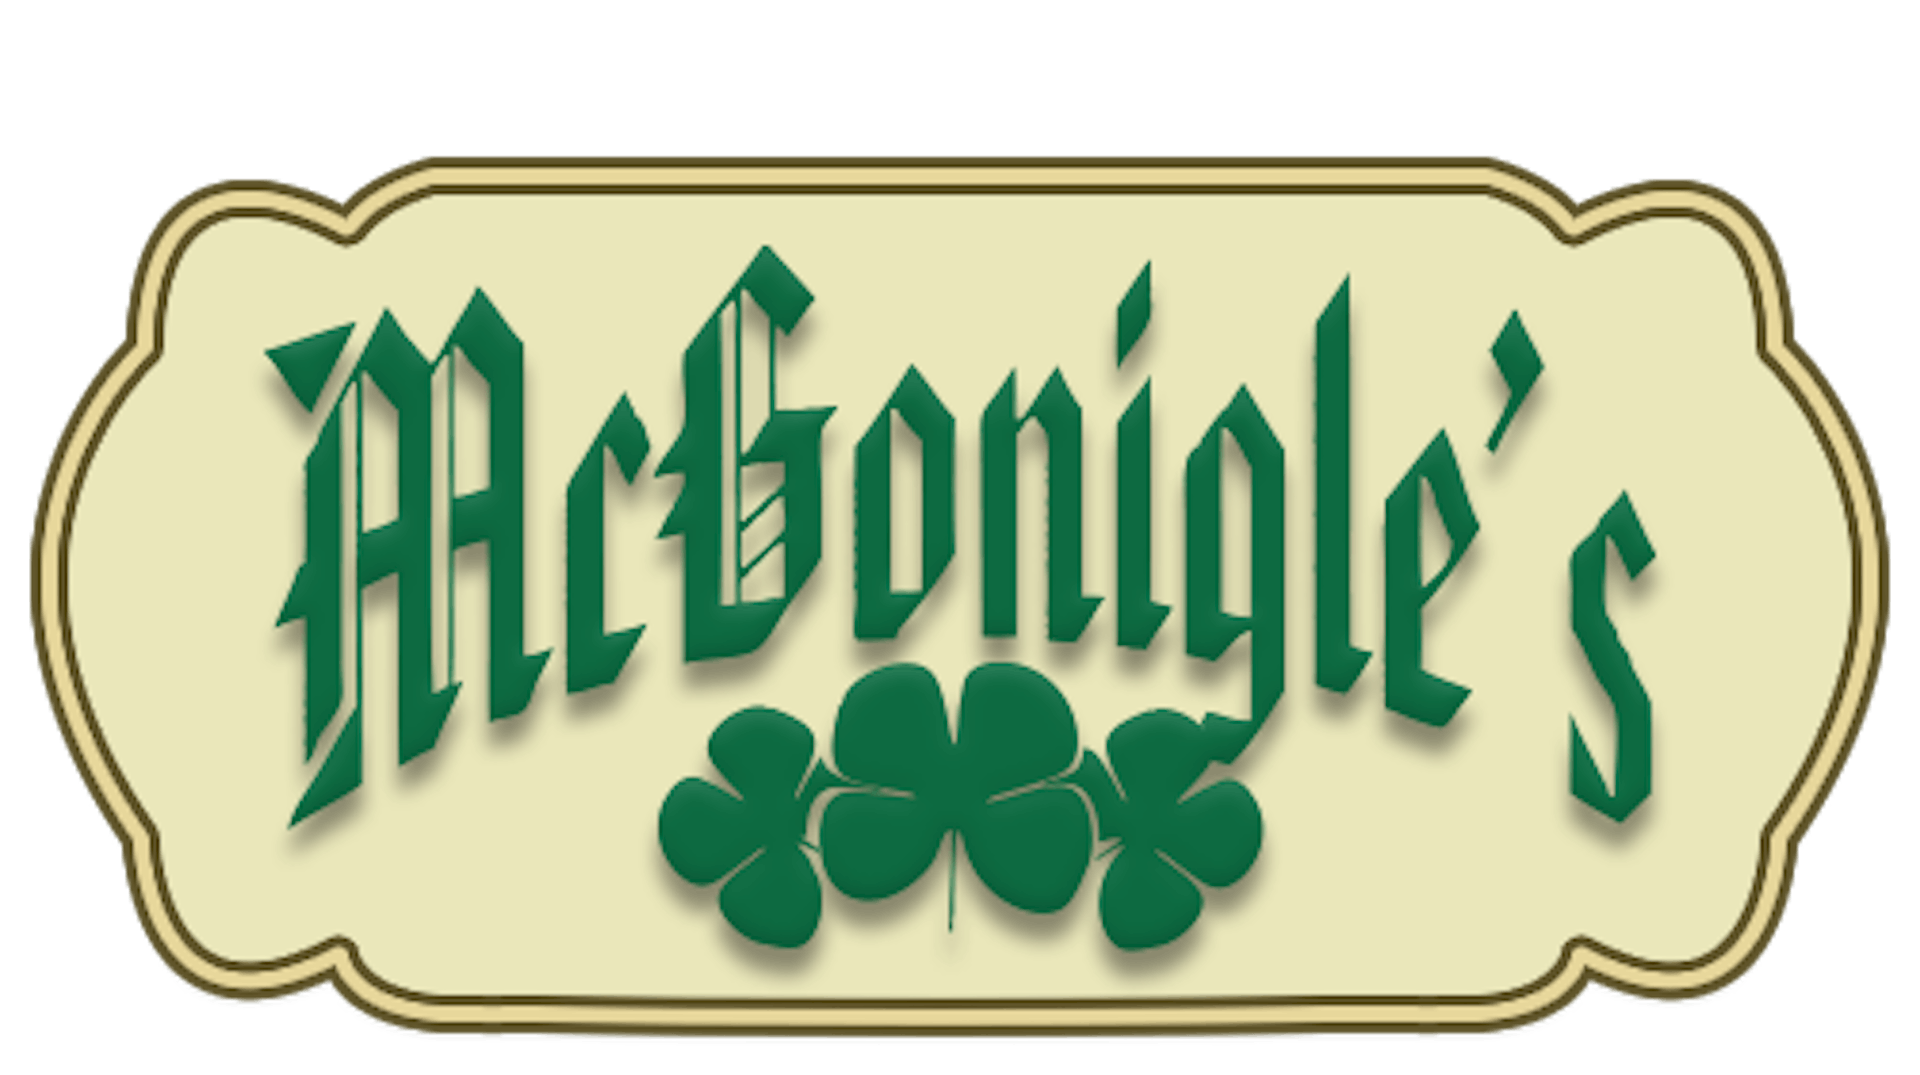 McGonigle's Irish Pub